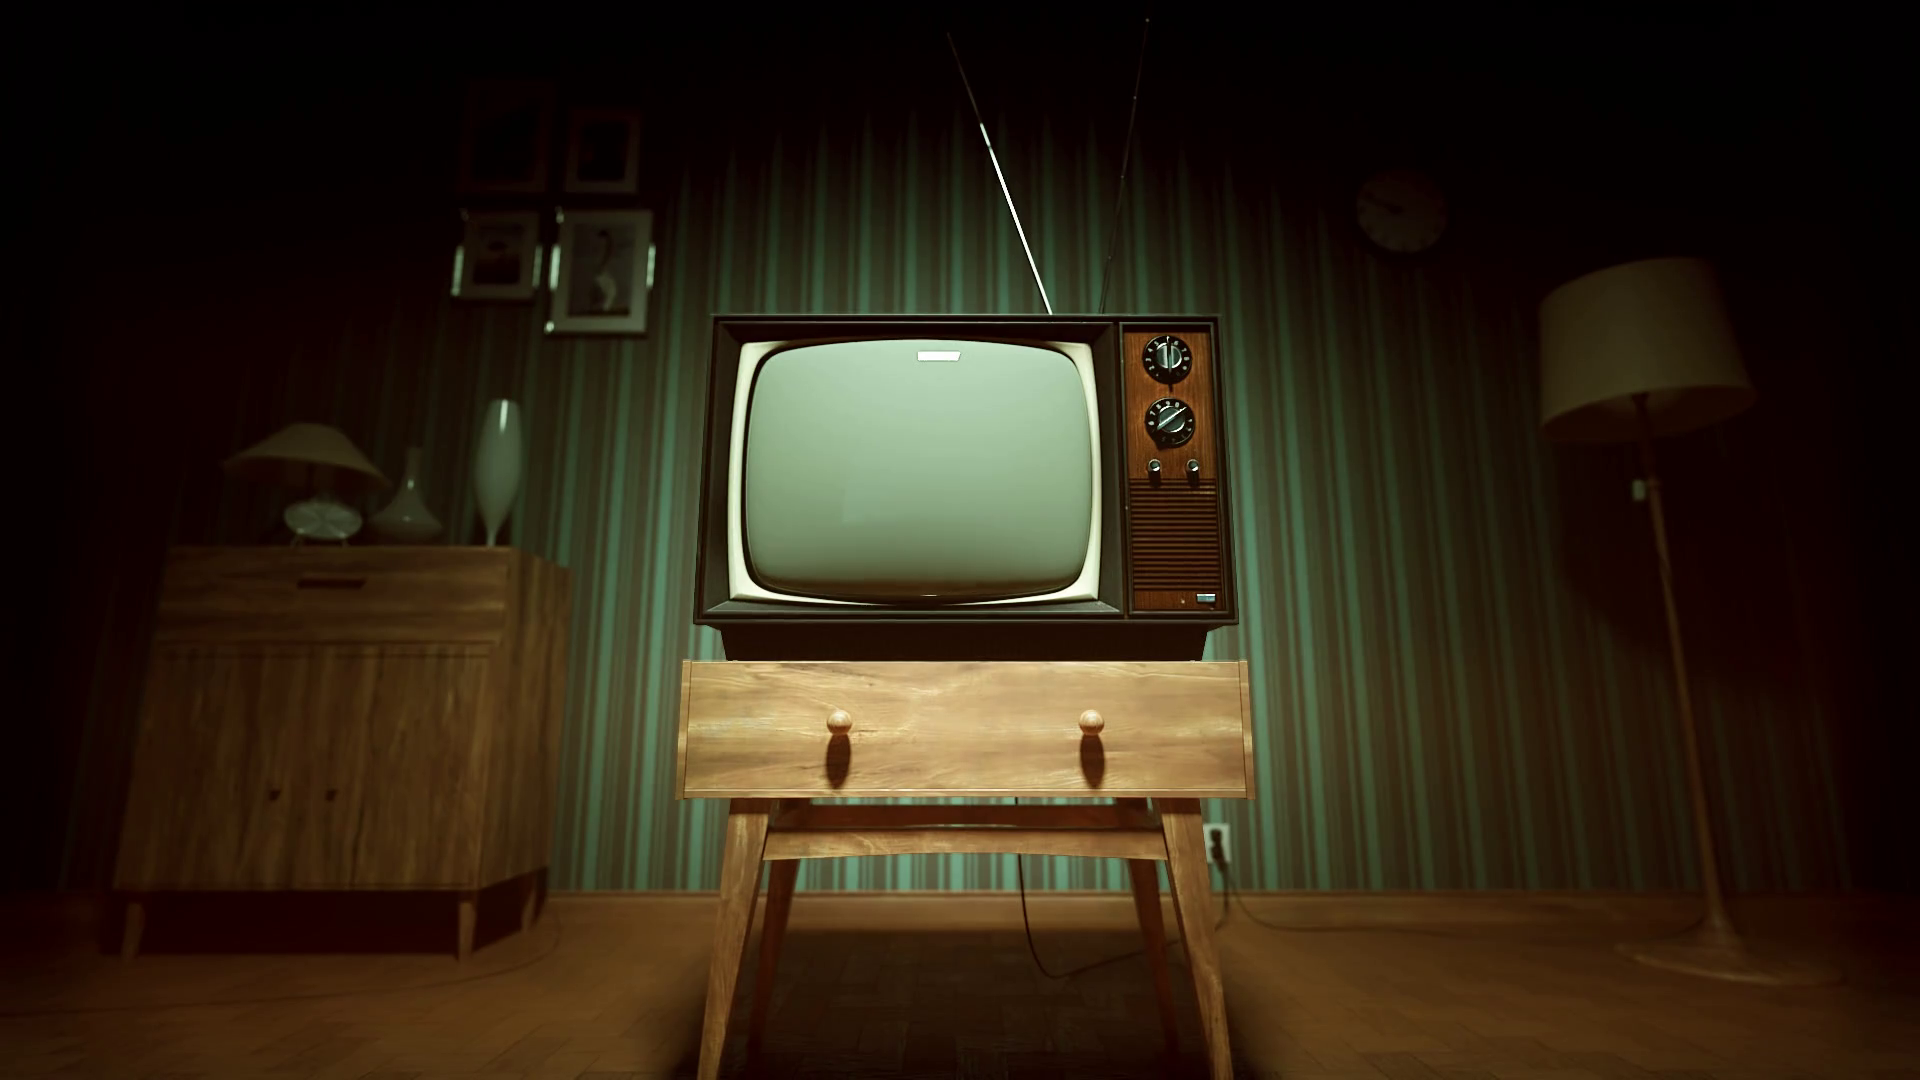 Телевизор в 6 0 5. Старый телевизор. Старинный телевизор. Старый телевизор в комнате. Ретро телевизор.